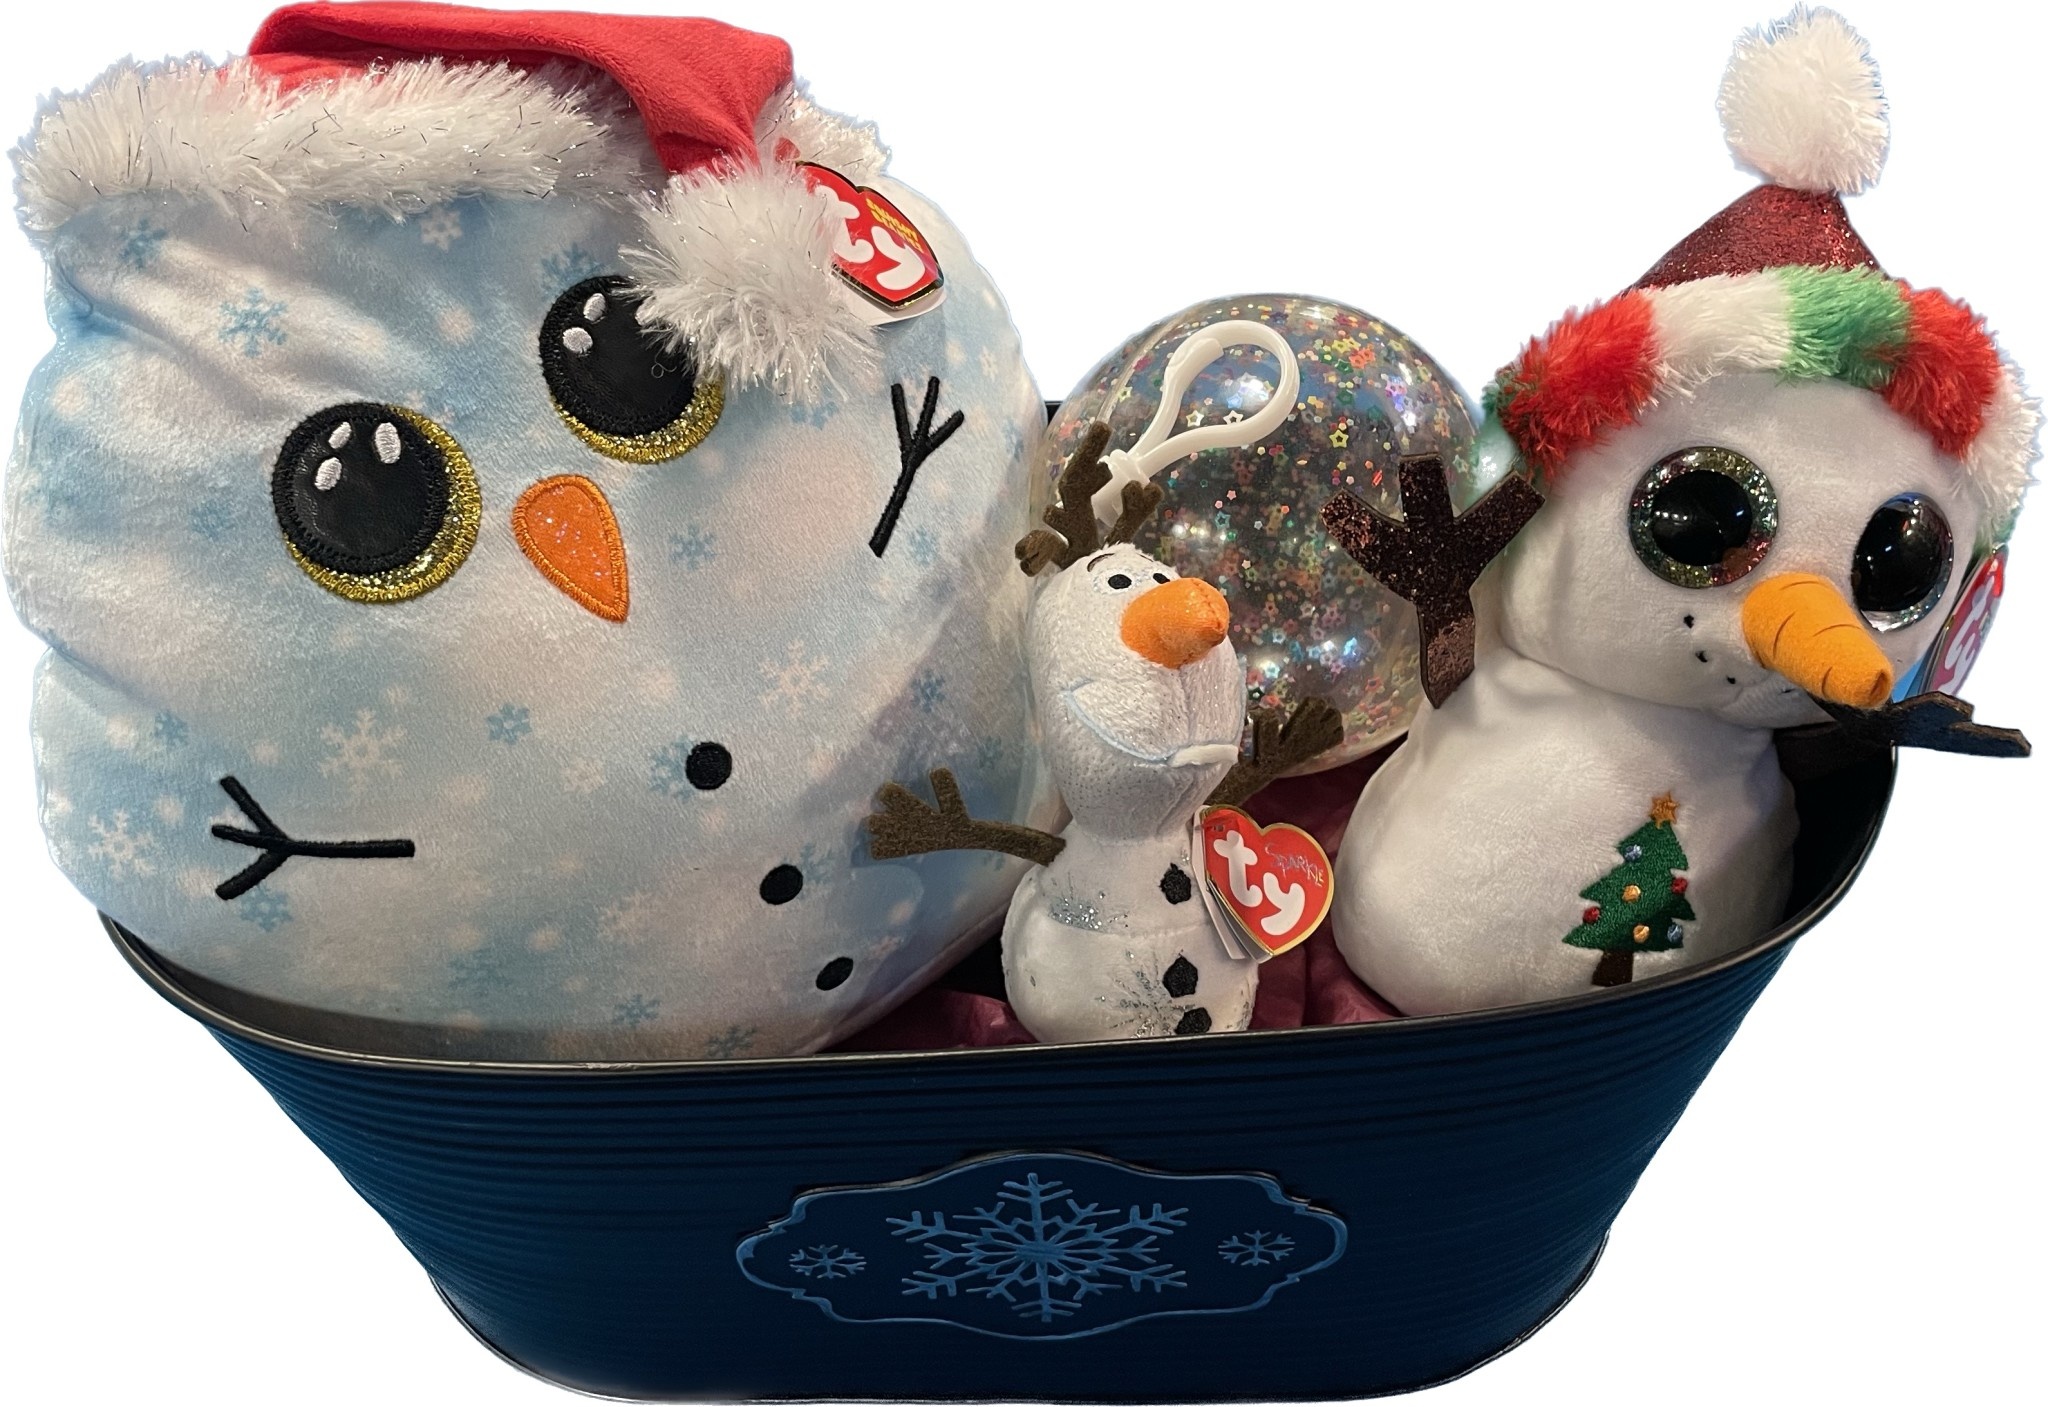 https://cdn.shoplightspeed.com/shops/615452/files/51131131/ty-snowman-olaf-ty-plush-stuffed-animal-gift-baske.jpg